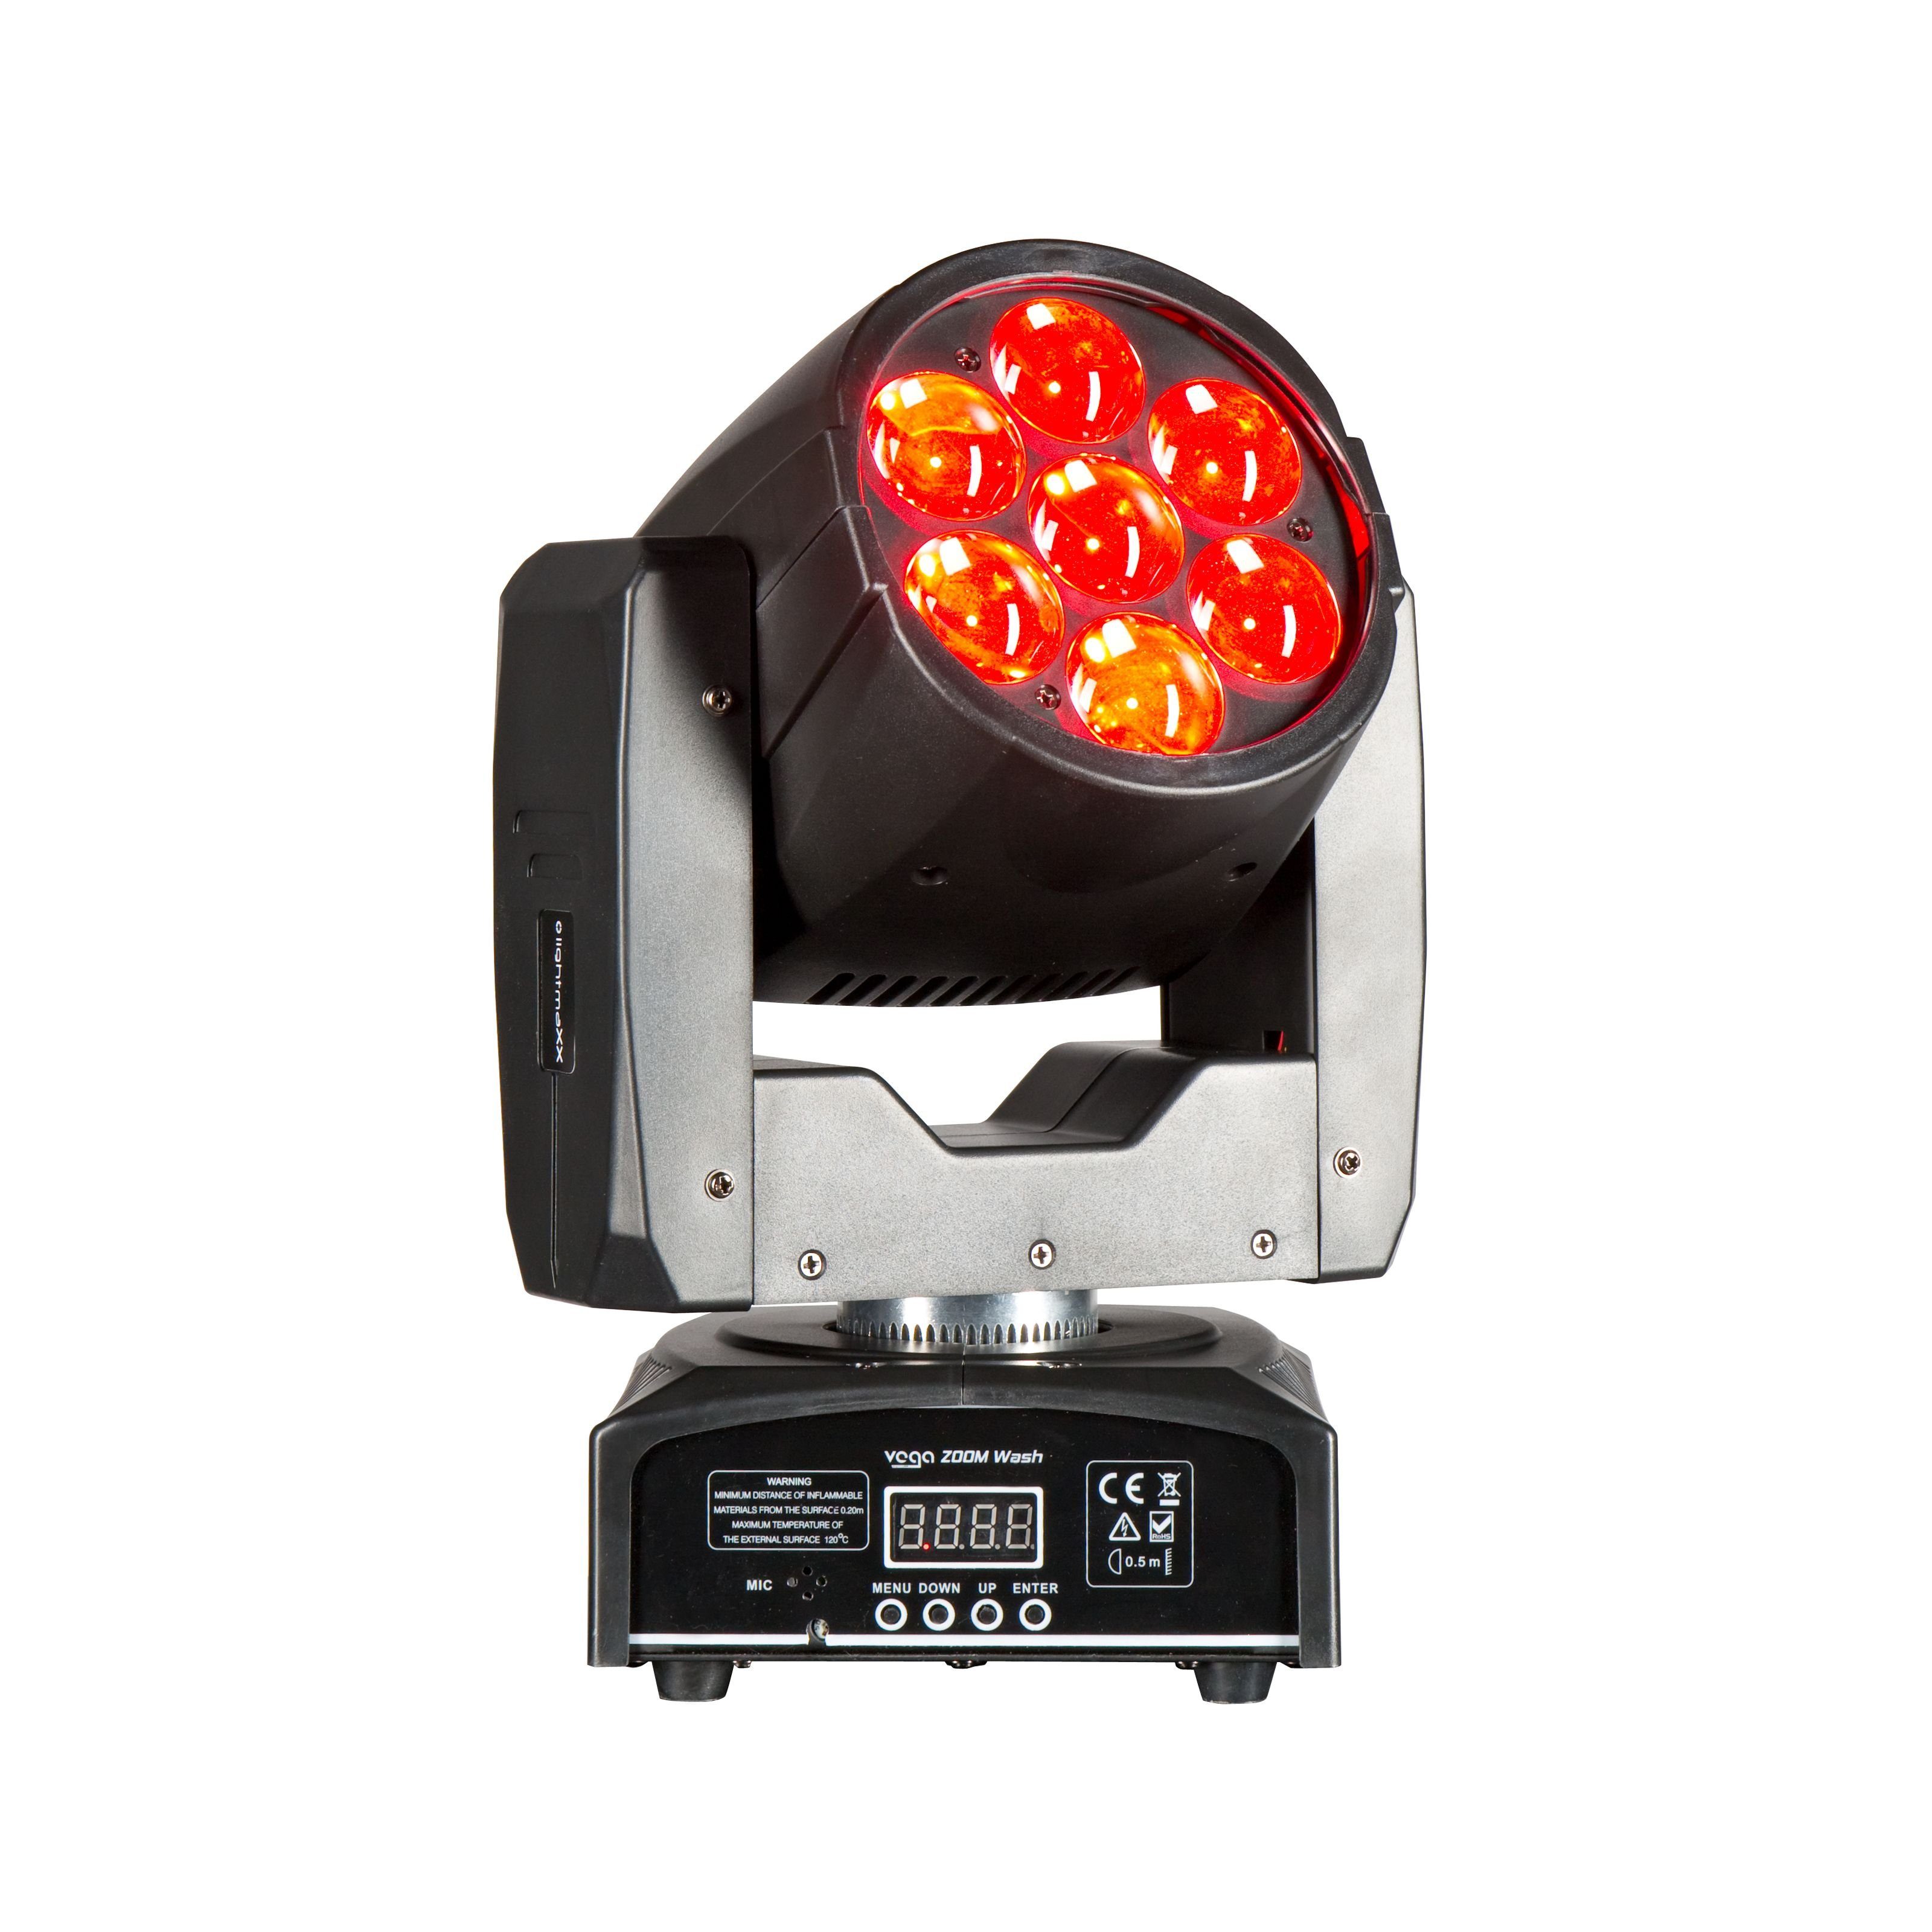 lightmaXX LED Scheinwerfer, LED Moving Head, RGBW Wash Beam, Zoom Funktion